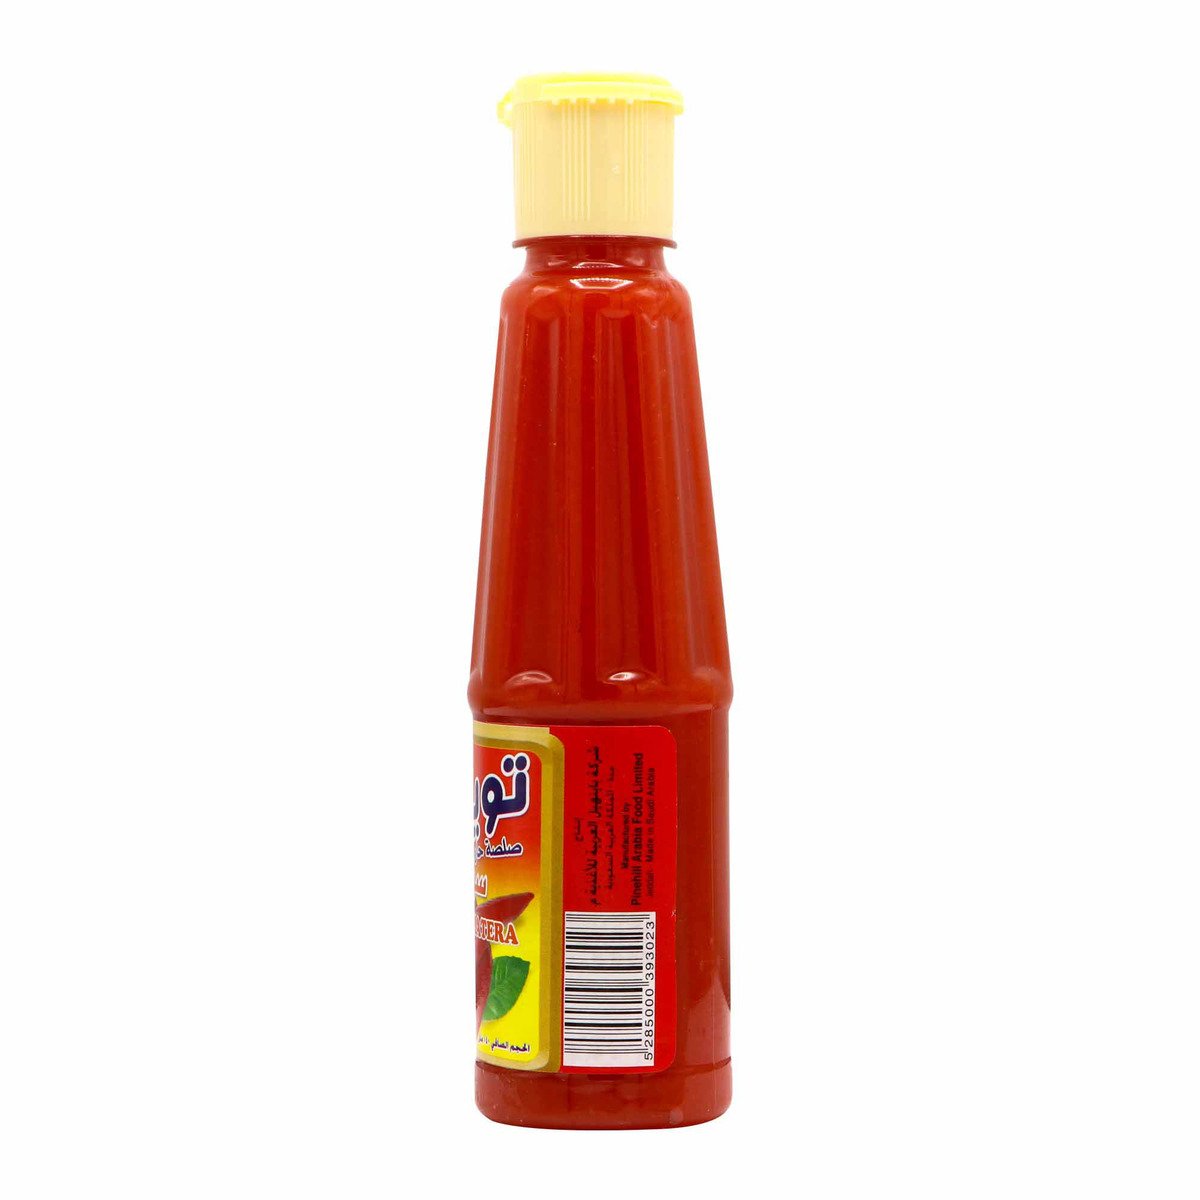 Toya Chili Sauce 140ml